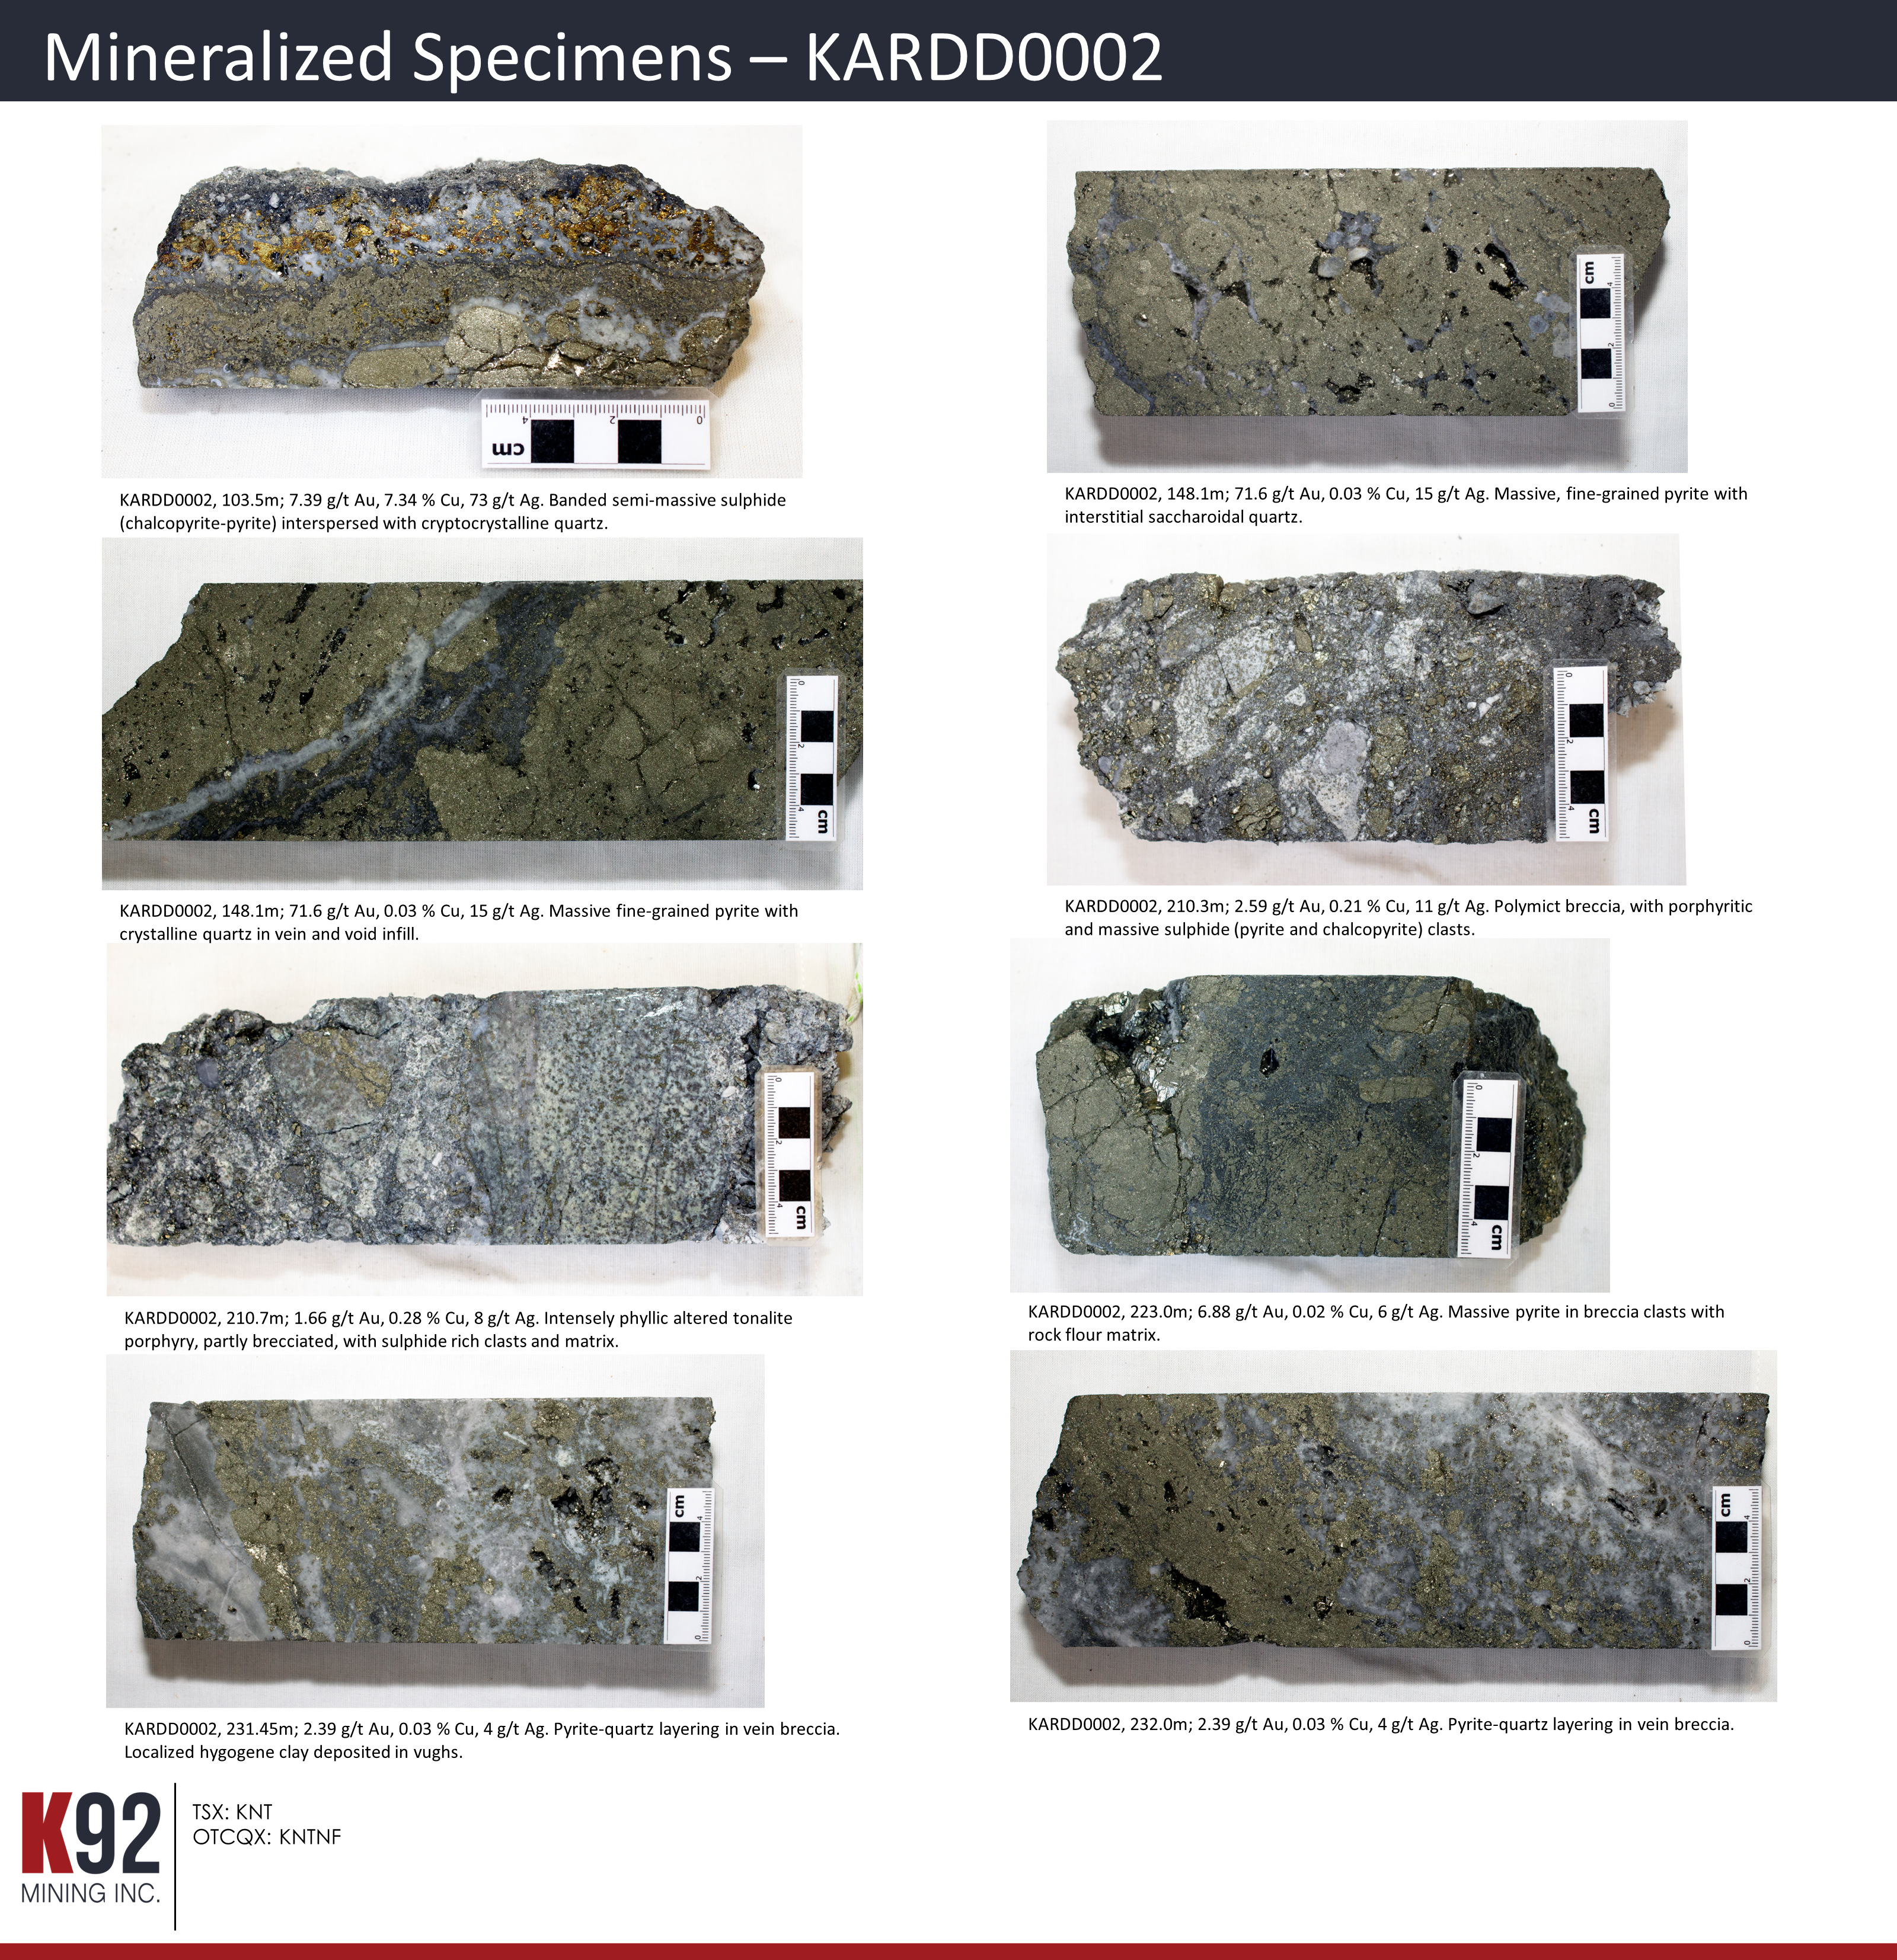 Figure 7 - Mineralized Specimens (KARDD0002)